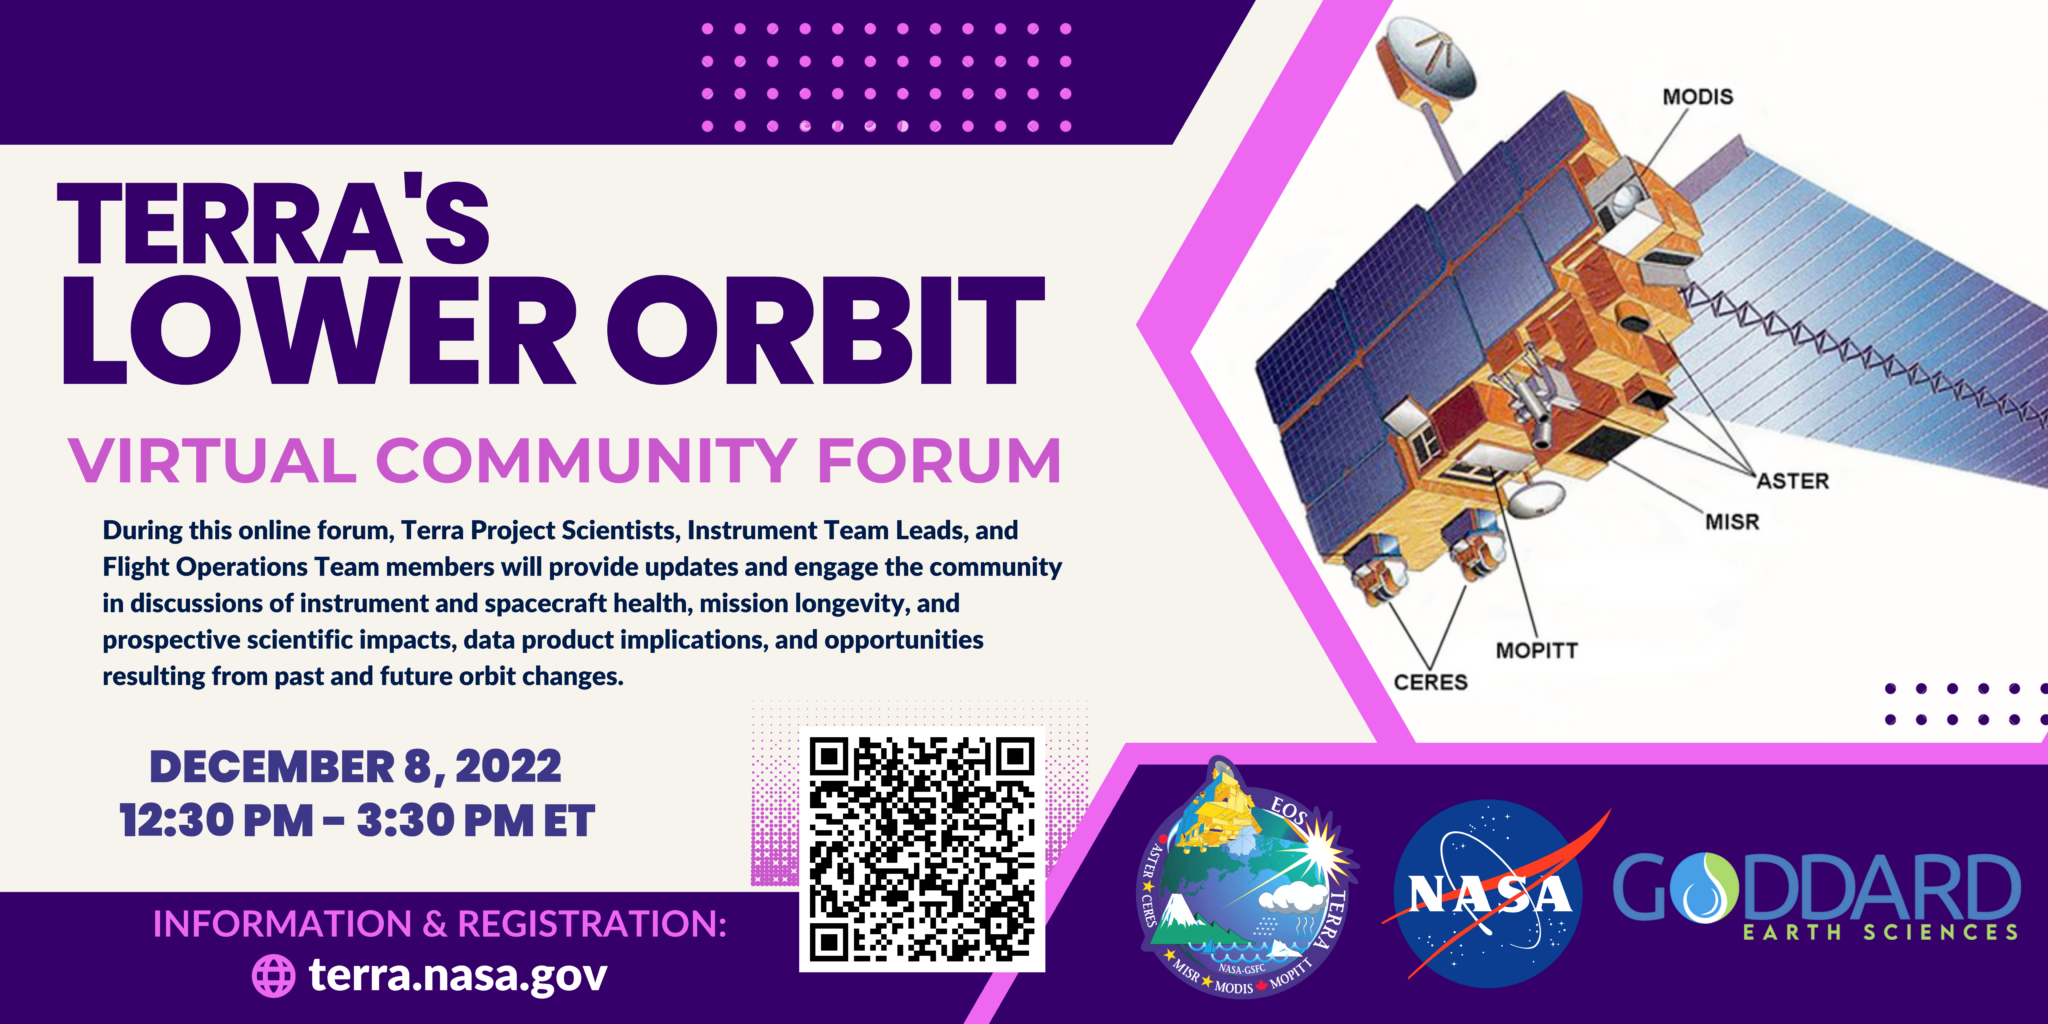 Terra's Lower Orbit Virtual Community Forum